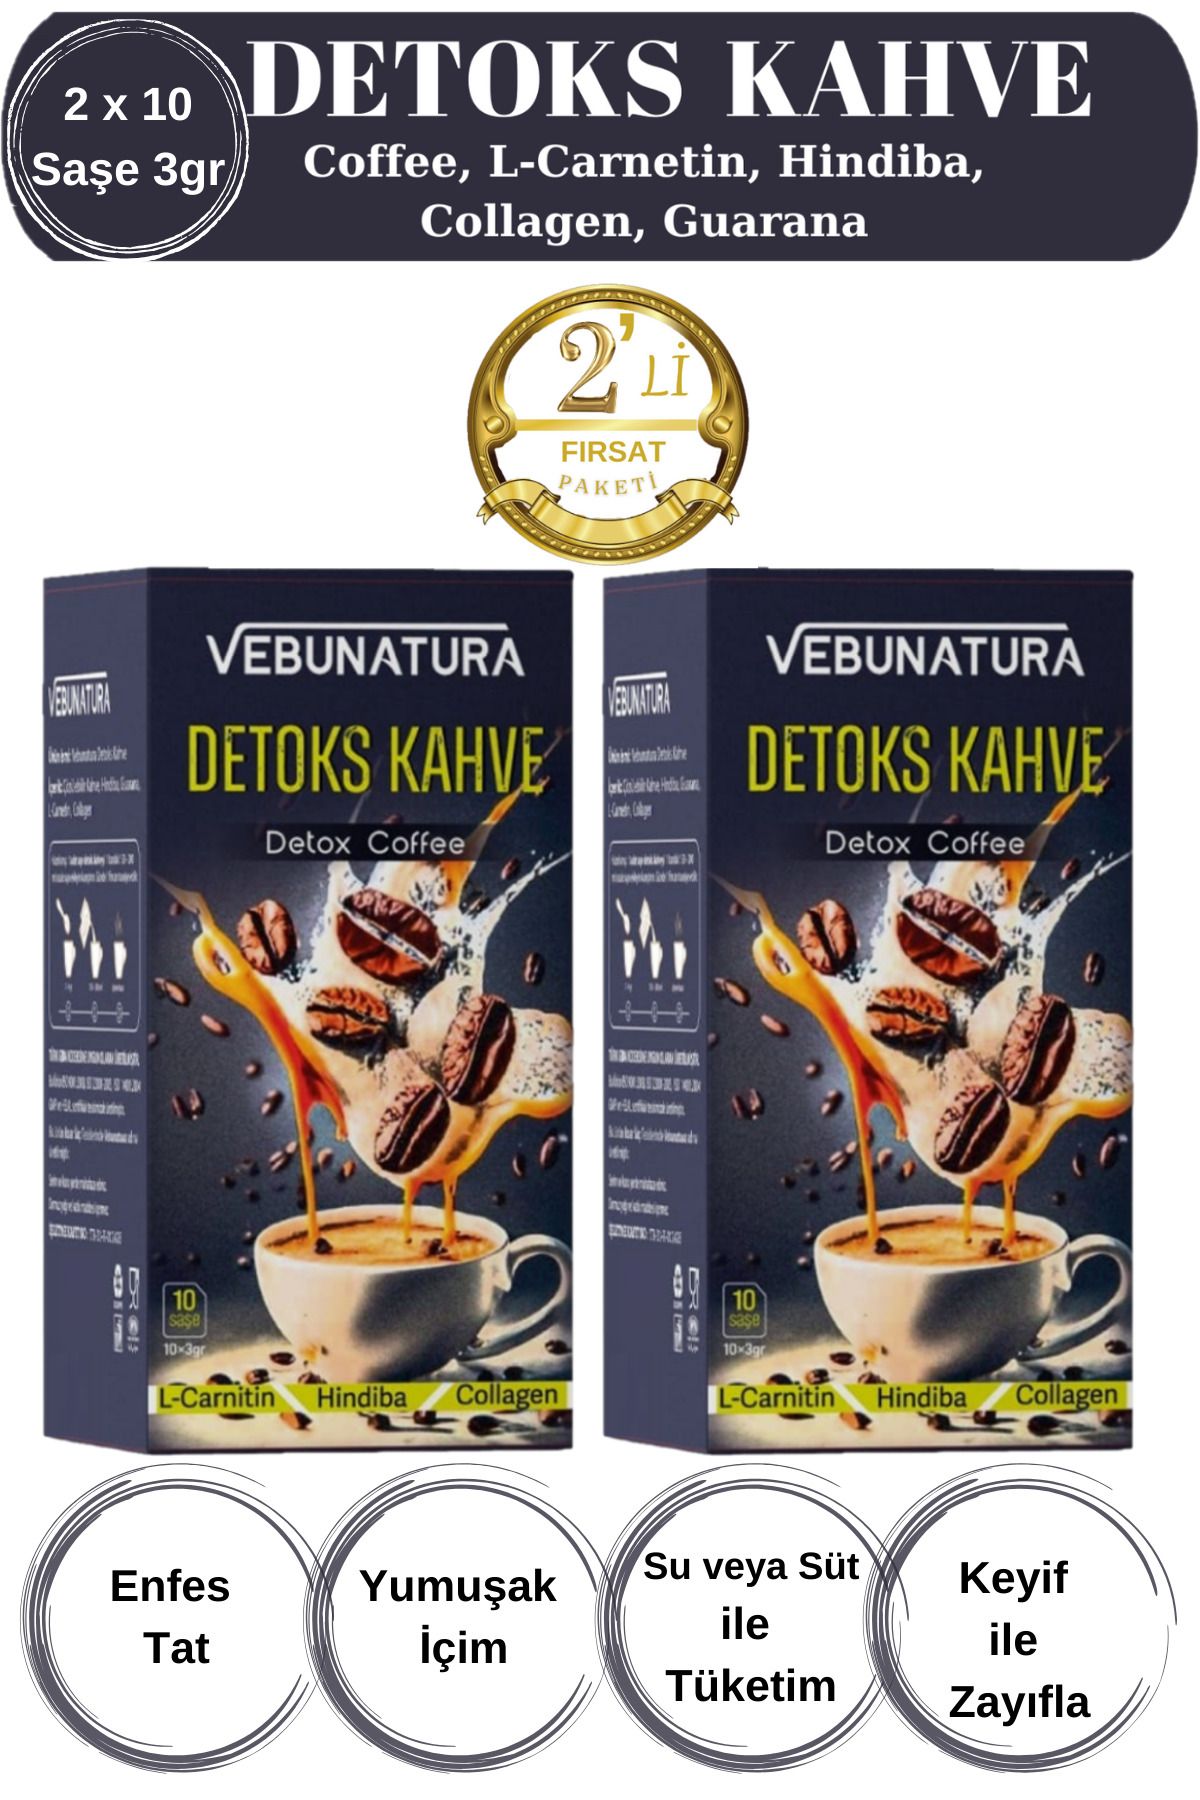 VEBUNATURA Detox Kahve (Hindiba, L-Carnitin, Collagen,Guarana) İçeren Detoks Diyet Kahve 2'li Fırsat Paketi